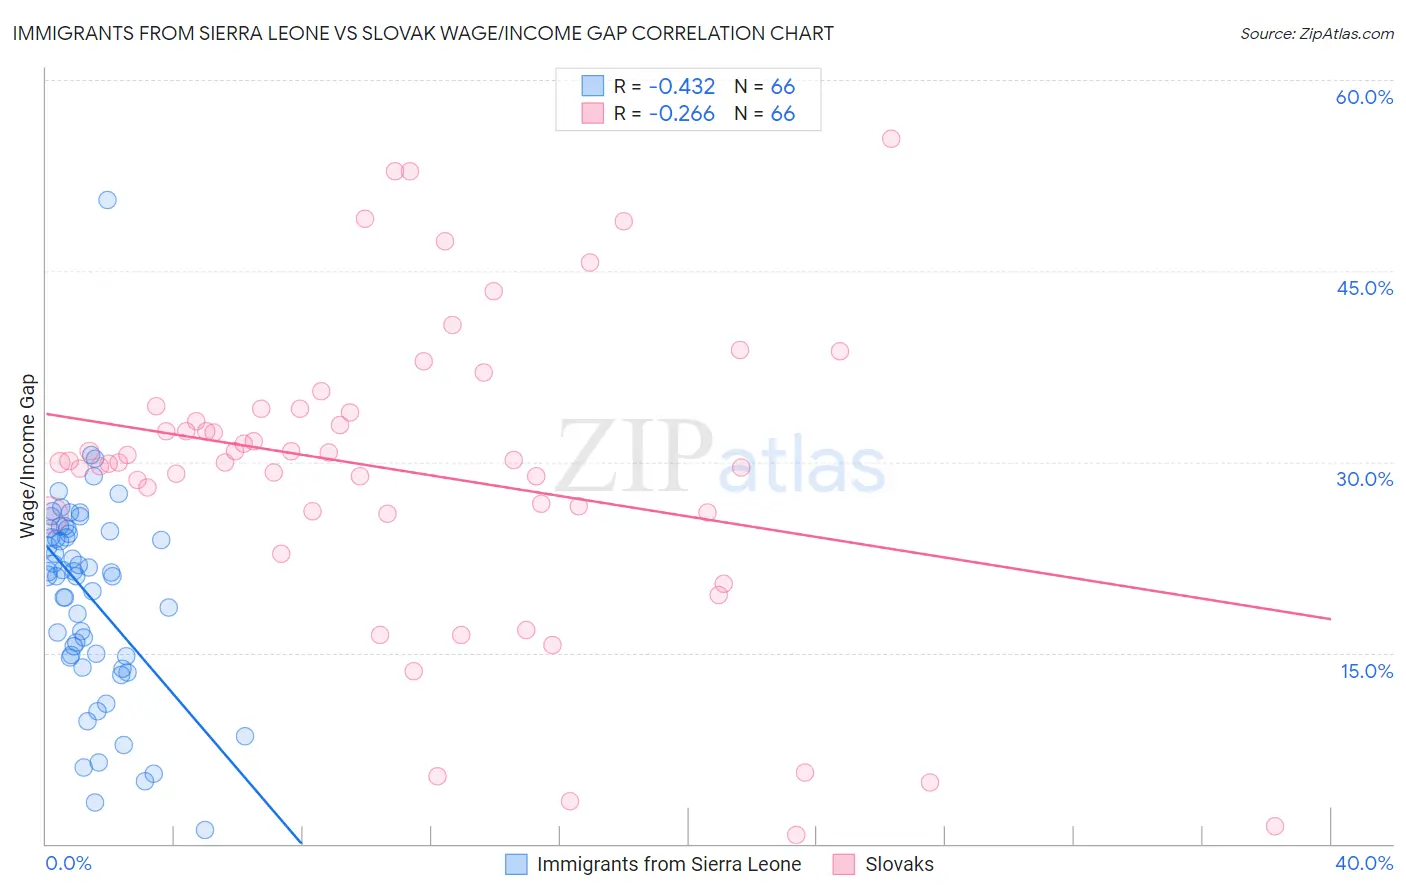 Immigrants from Sierra Leone vs Slovak Wage/Income Gap